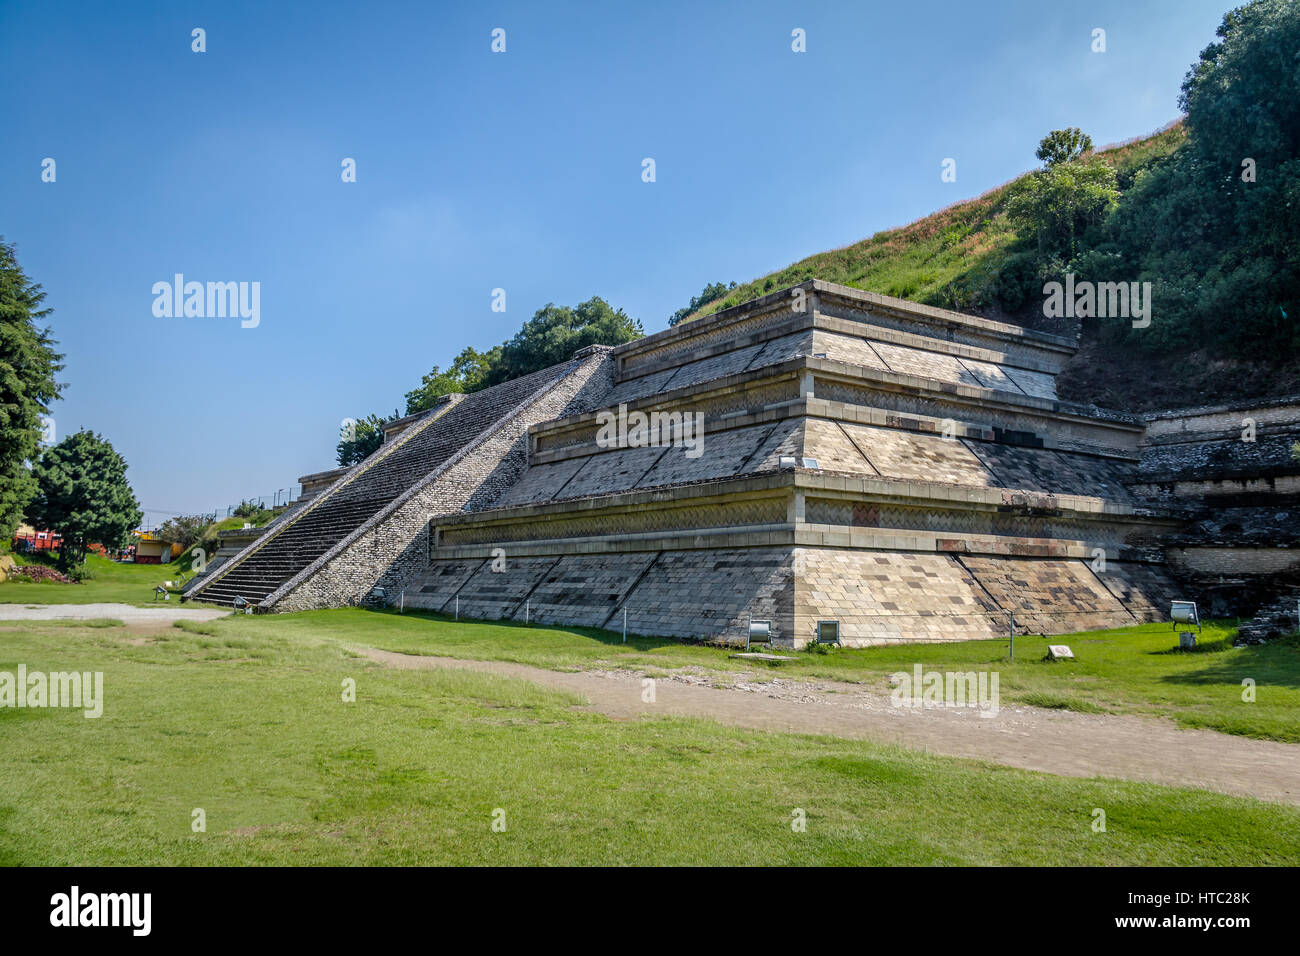 Pyramide de Cholula - Cholula, Puebla, Mexique Banque D'Images